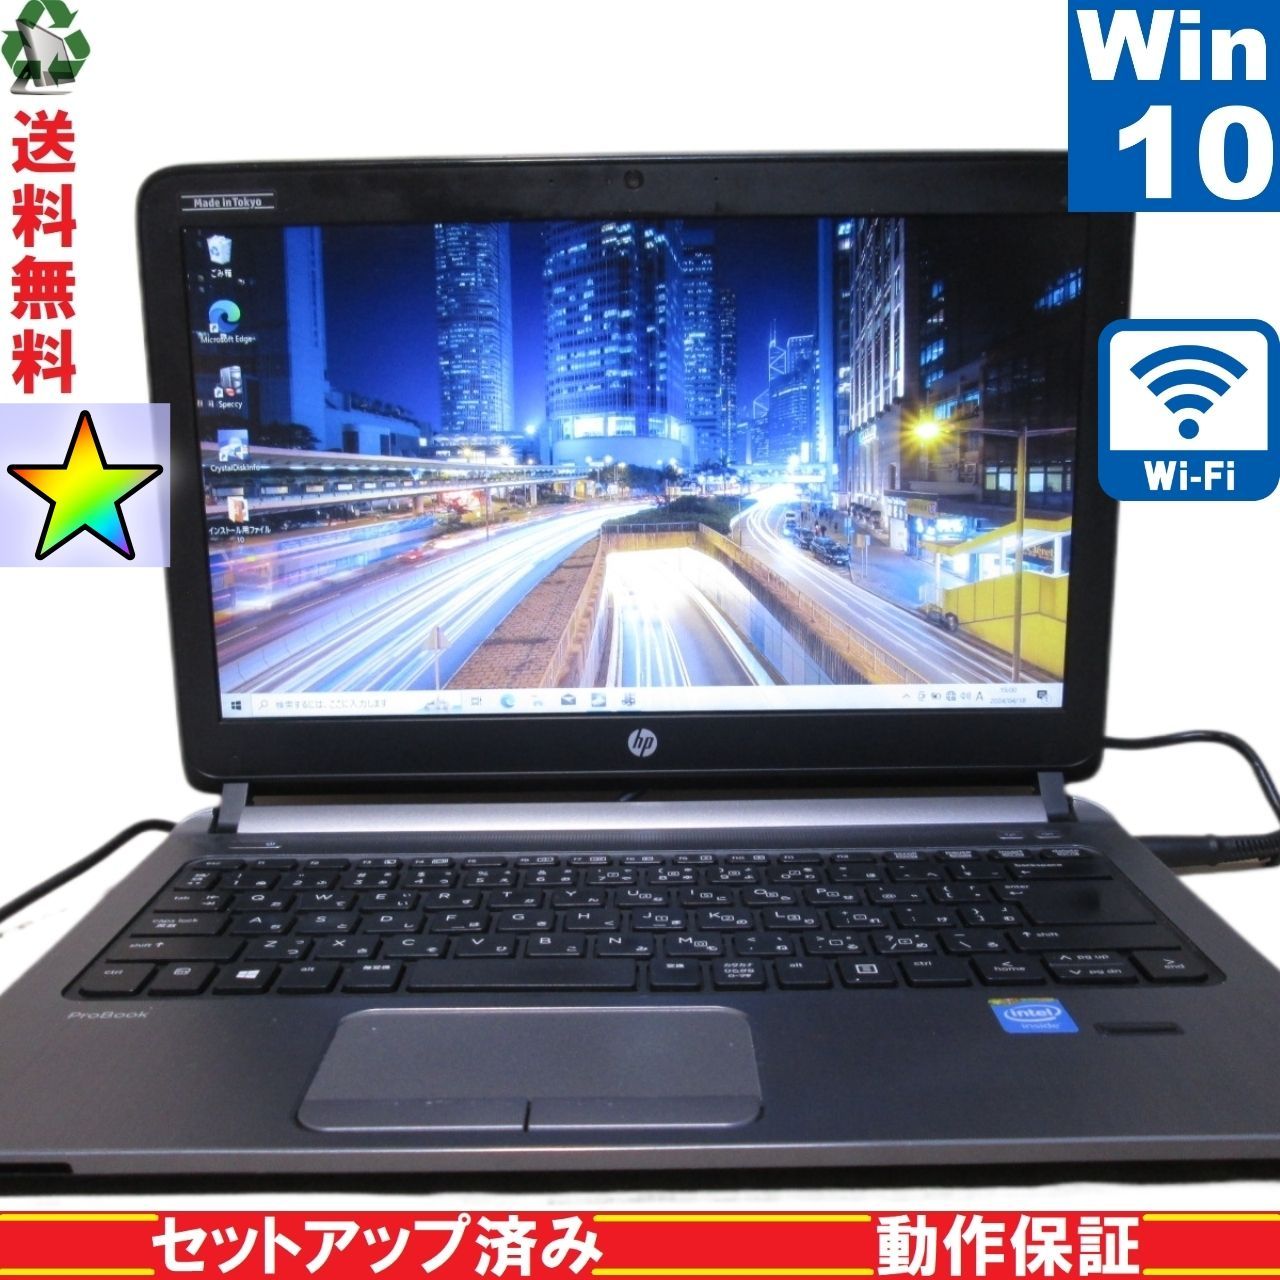 HP ProBook 430 G2【Celeron 3205U 1.5GHz】 【Windows10 Home】 Libre Office Wi-Fi  USB3.0 HDMI 長期保証 [89057] - メルカリ